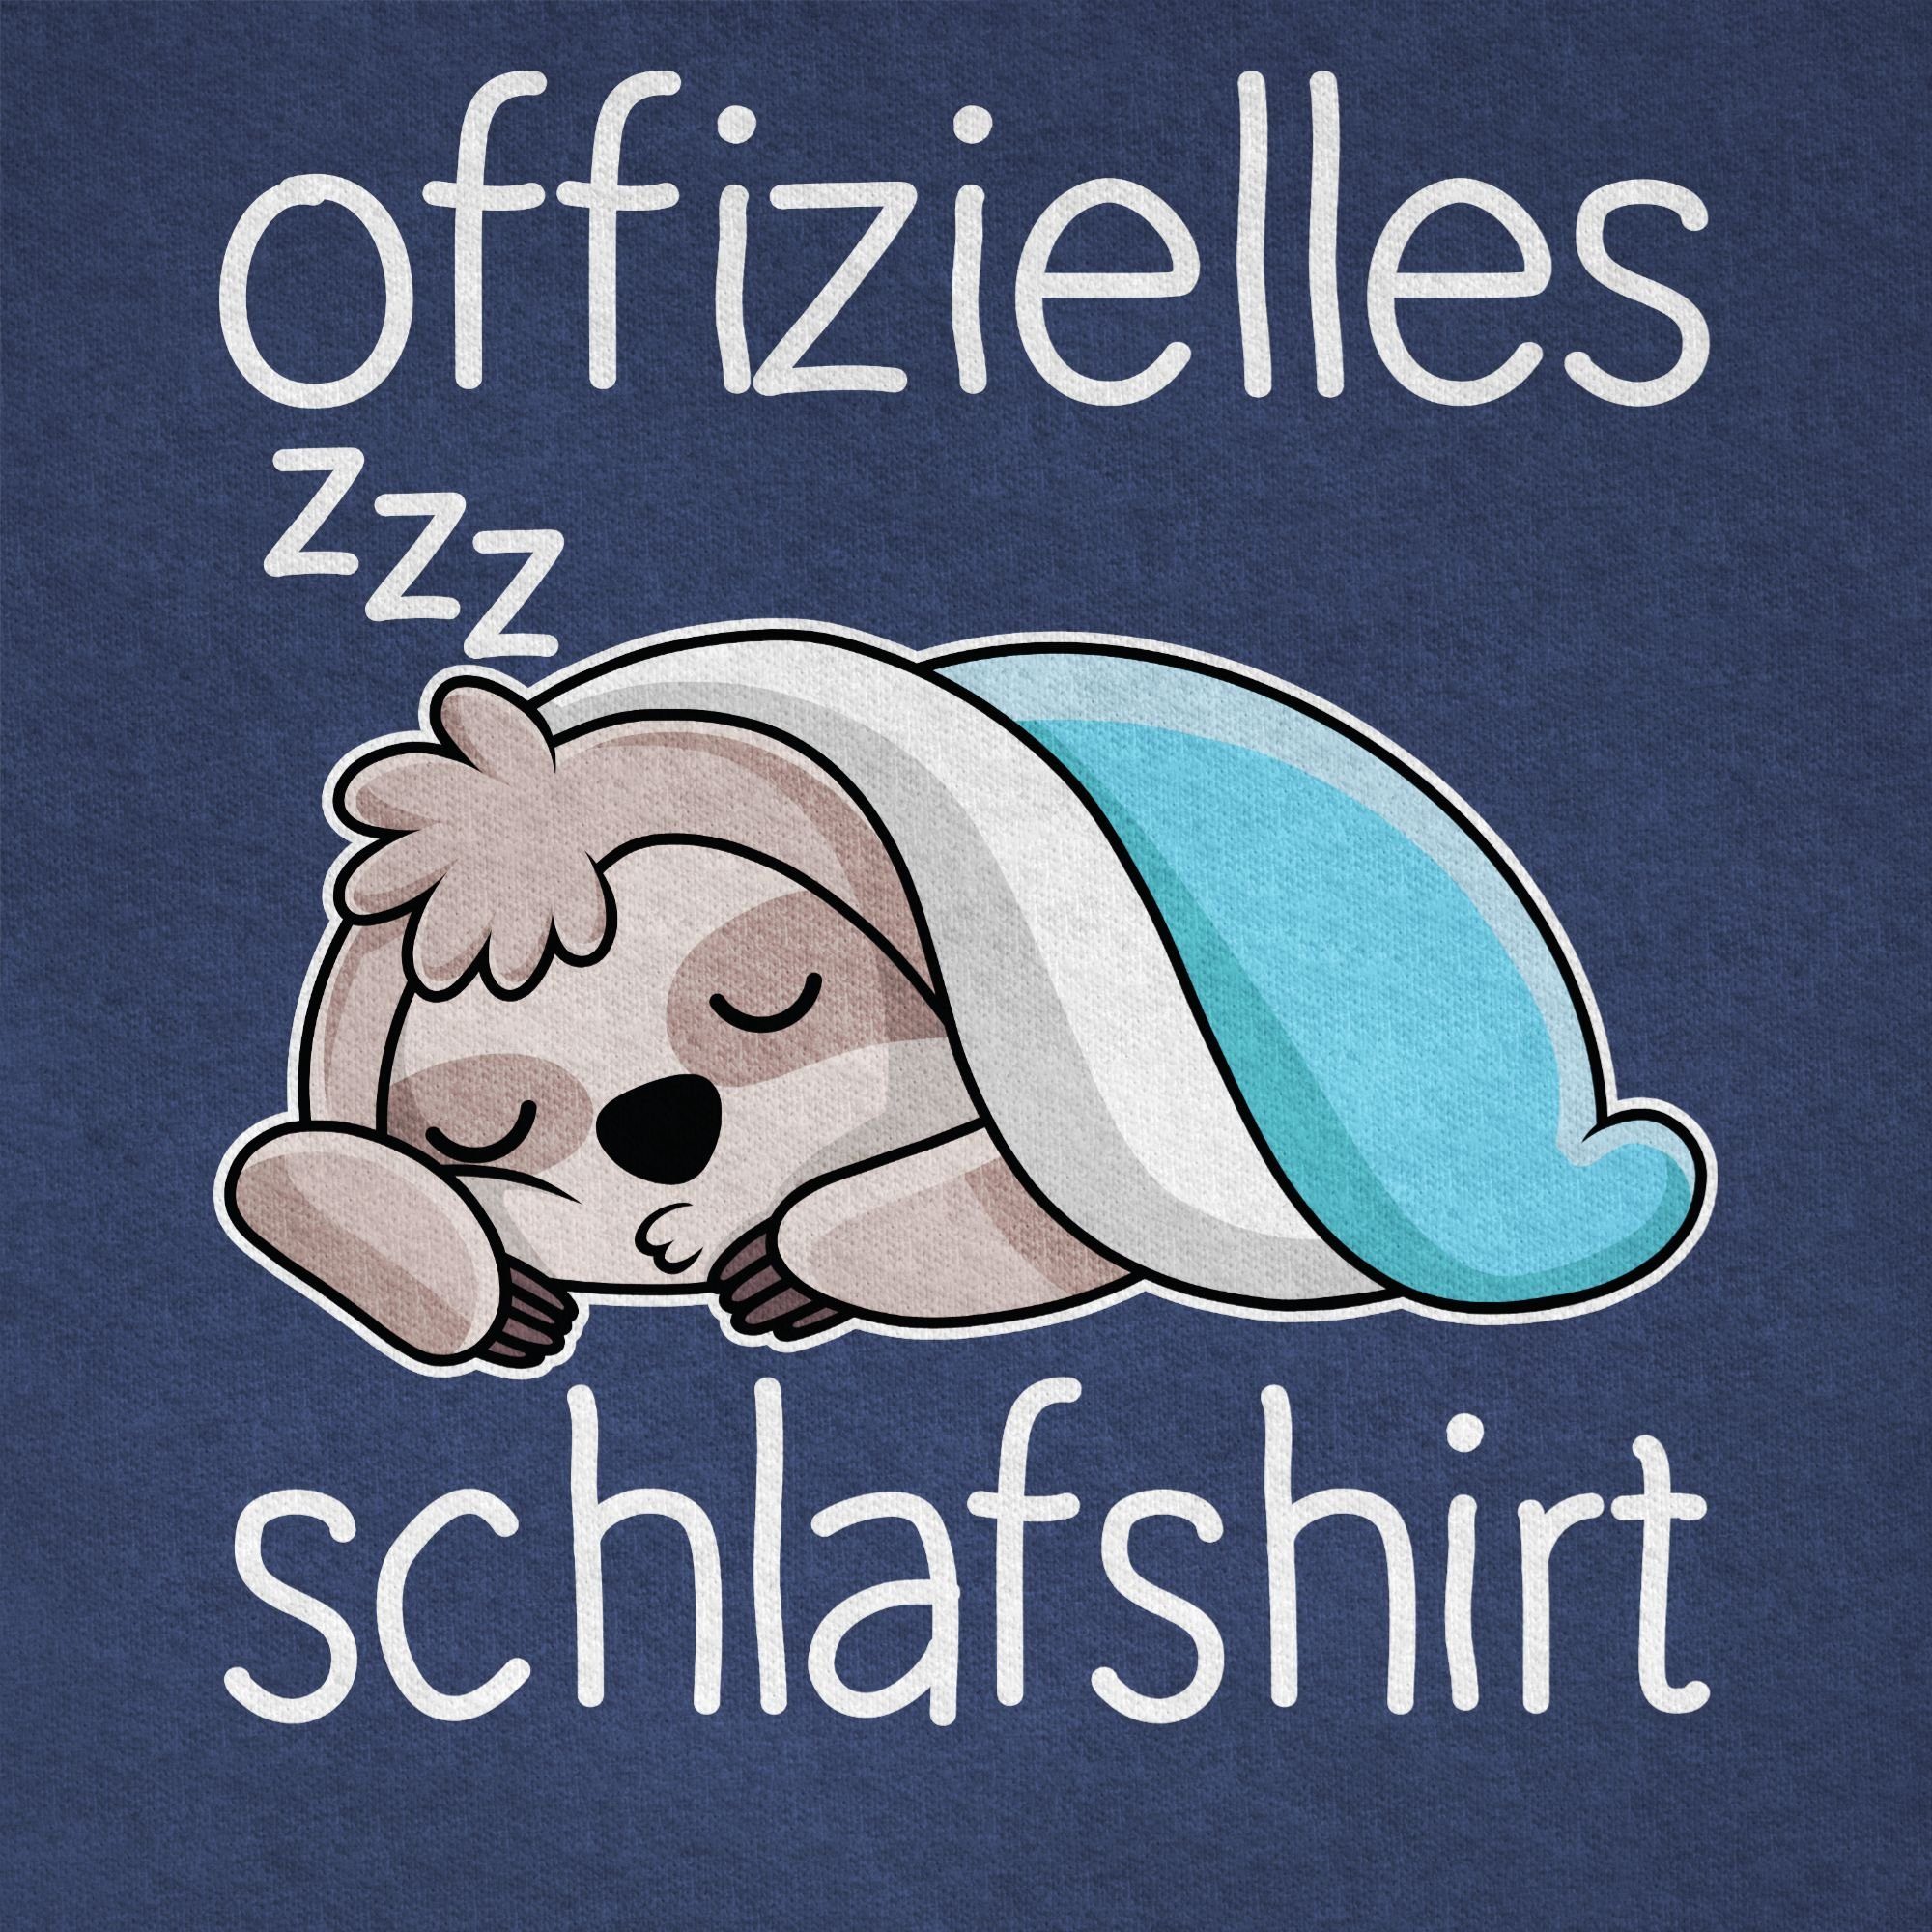 Shirtracer T-Shirt Offizielles Schlafshirt mit Meliert Kinder Dunkelblau - weiß Faultier Statement 01 Sprüche